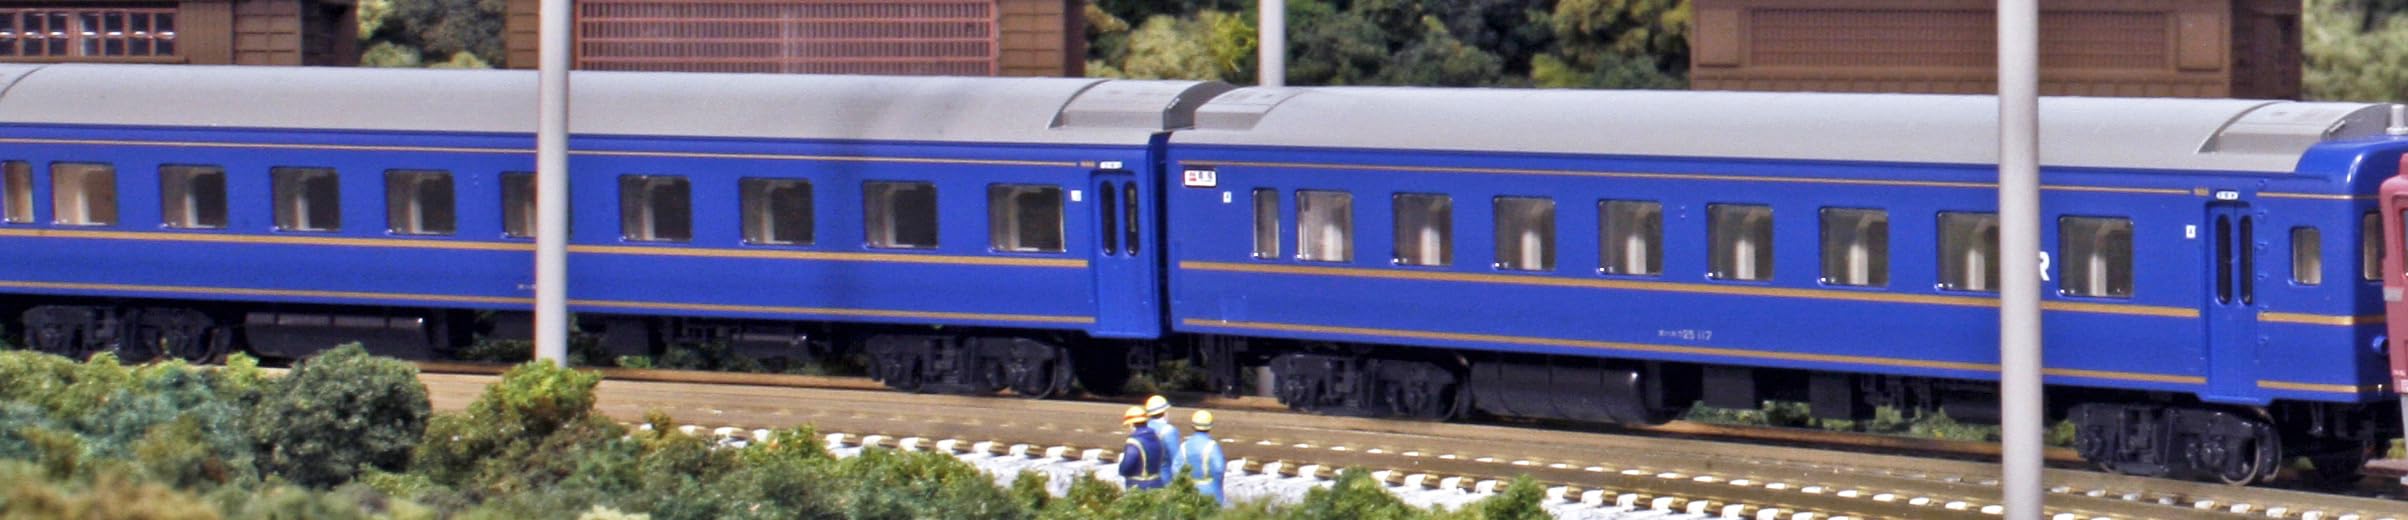 Kato N Gauge 24 Series Japan Nihonkai Sleeper Limited Express 6 Car Set 10-881 Railway Model